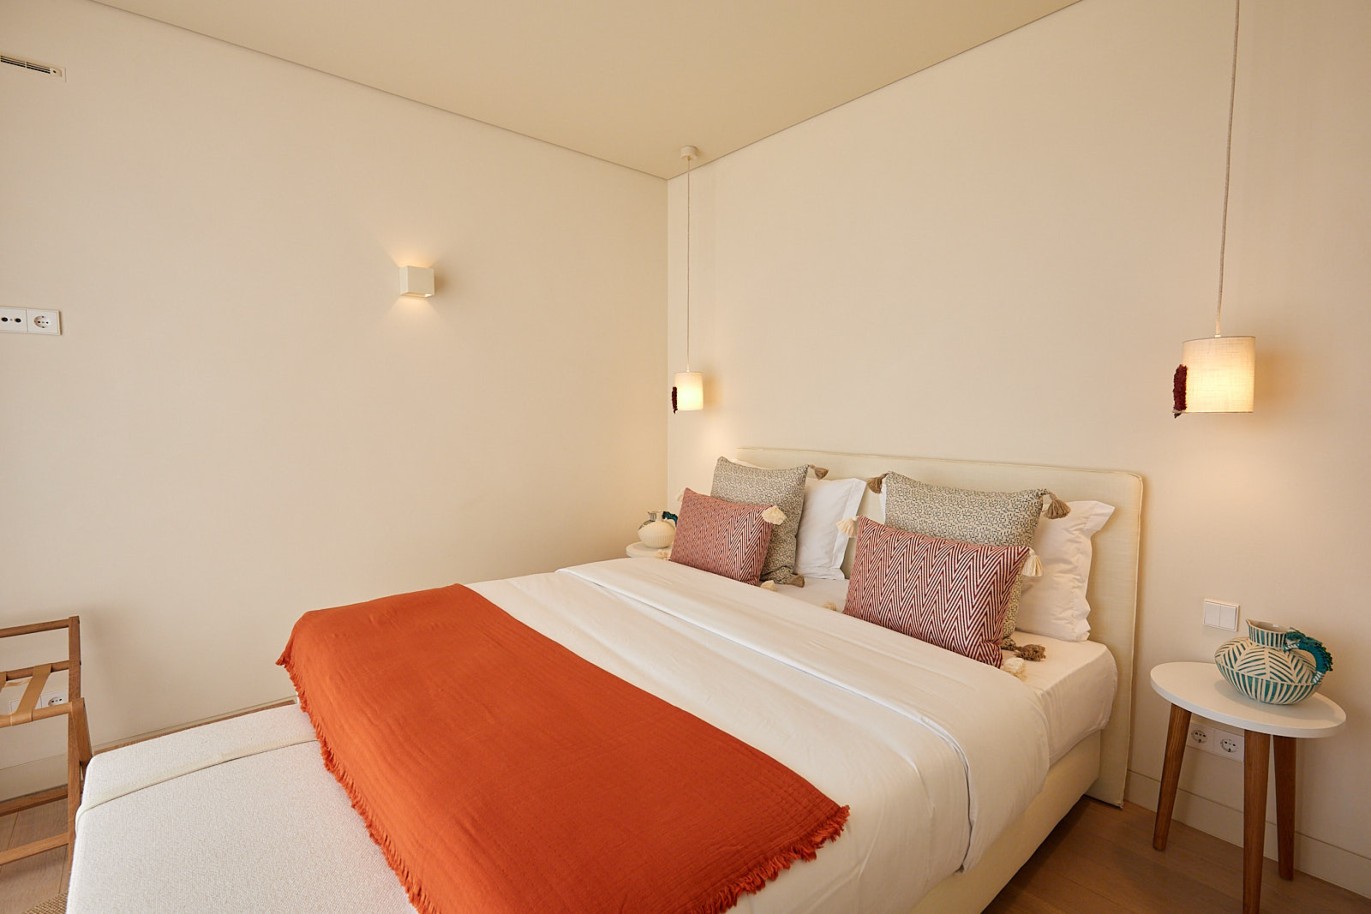 2 bedroom apartment in resort, for sale in Porches, Algarve_229075